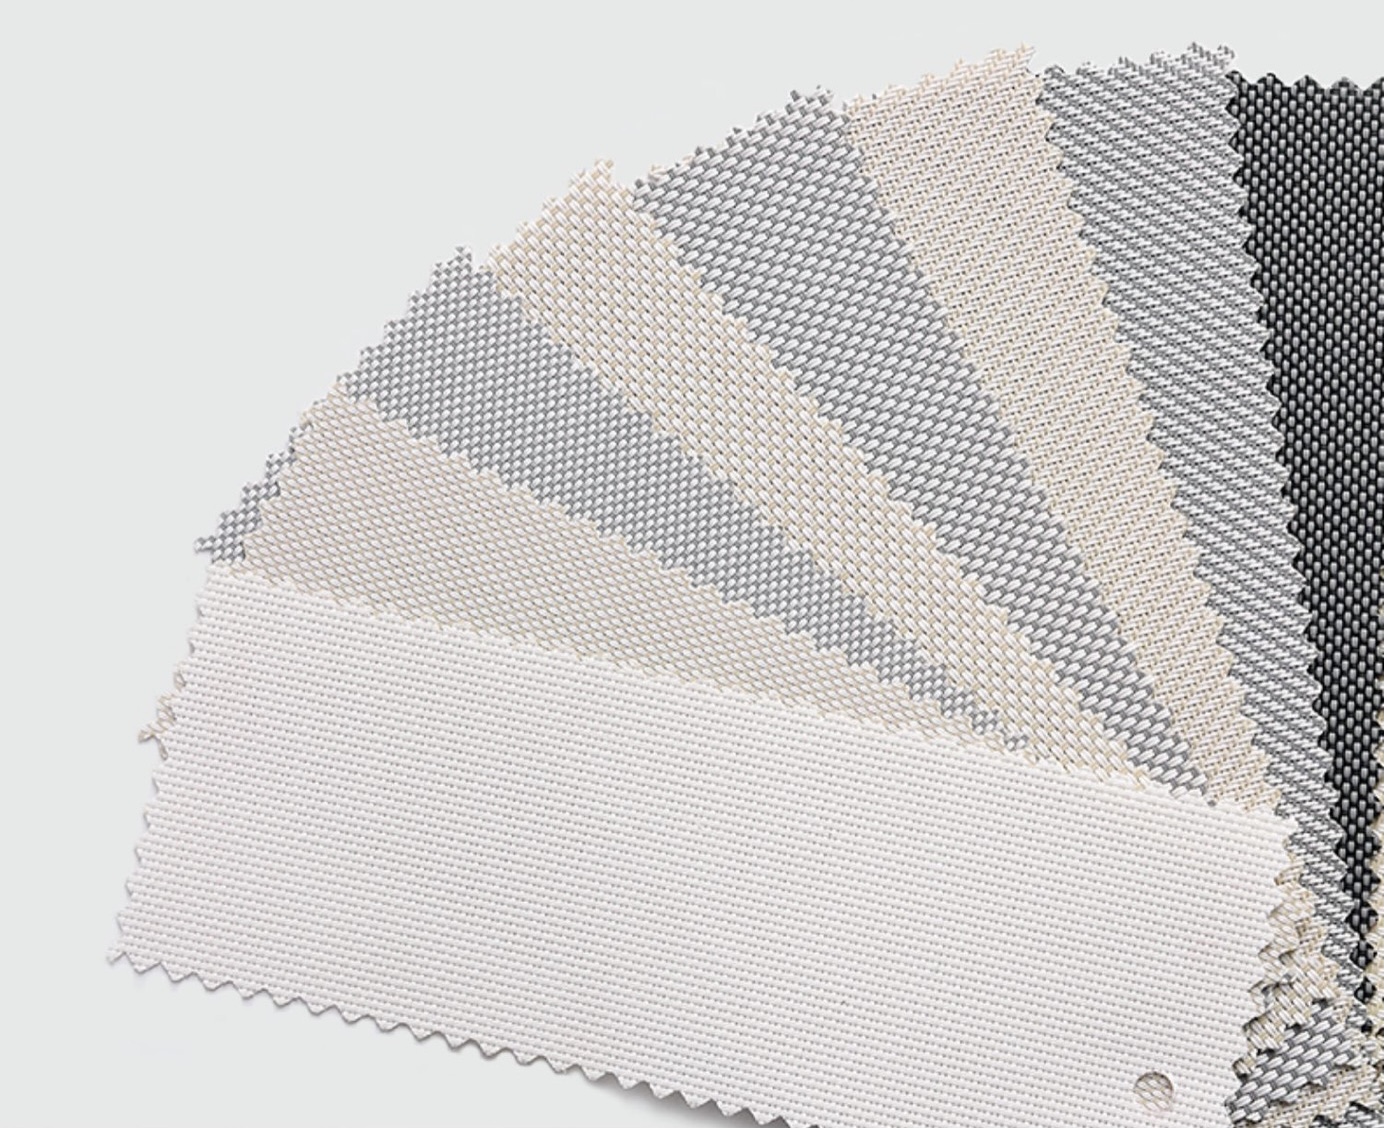 suncreen roller blinds fabric